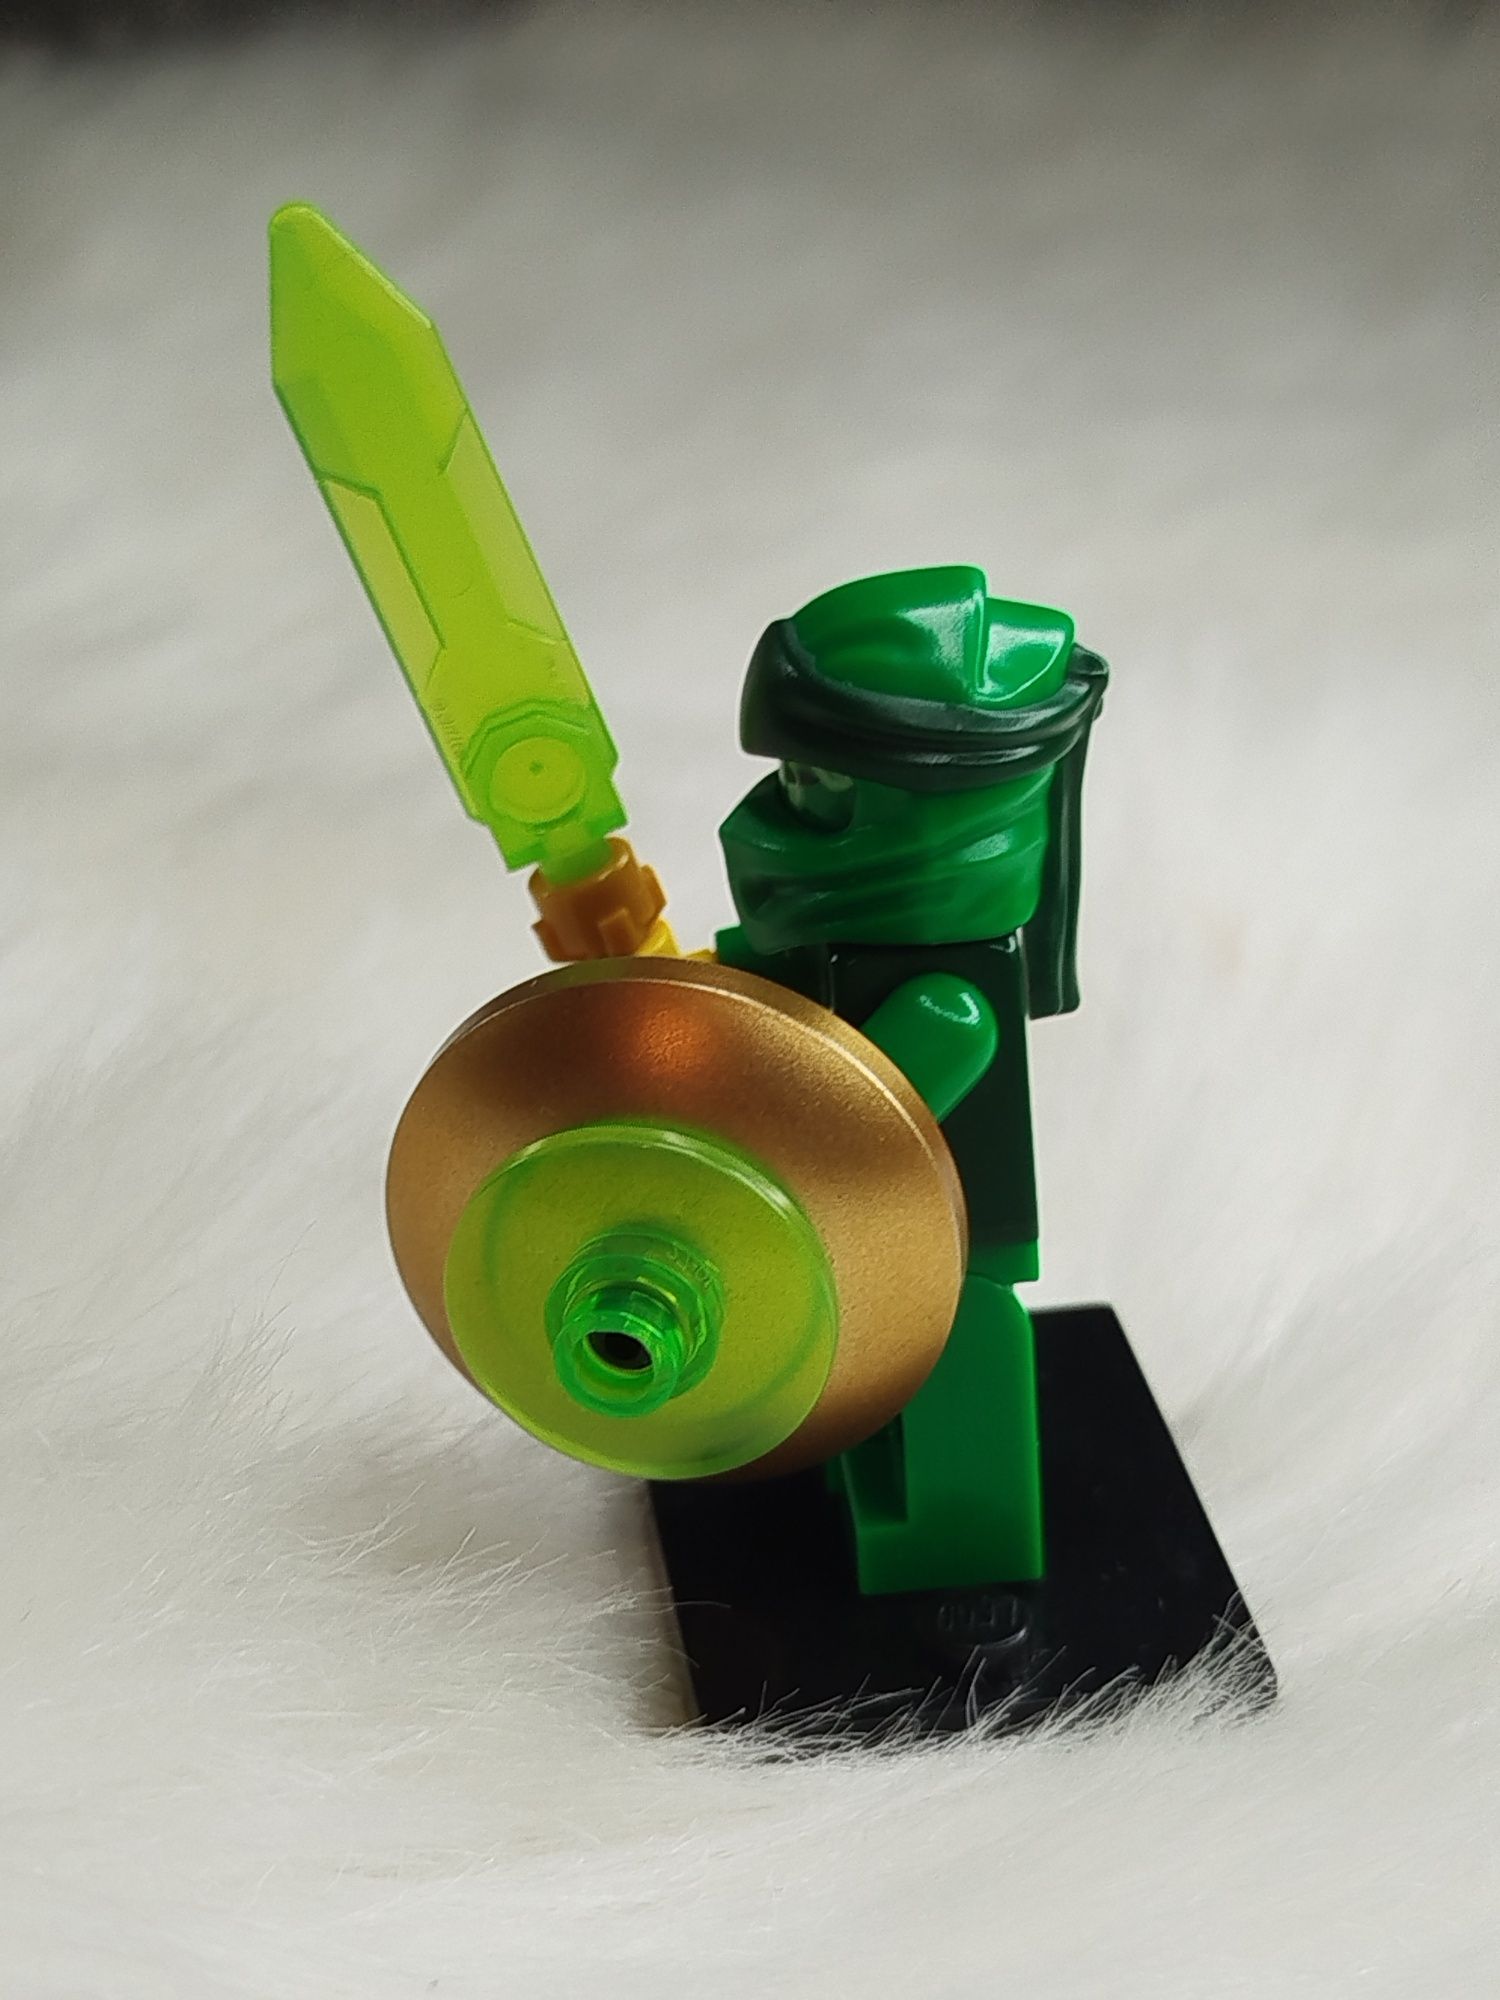 Figurka lego ninjago Lloyd z broniami